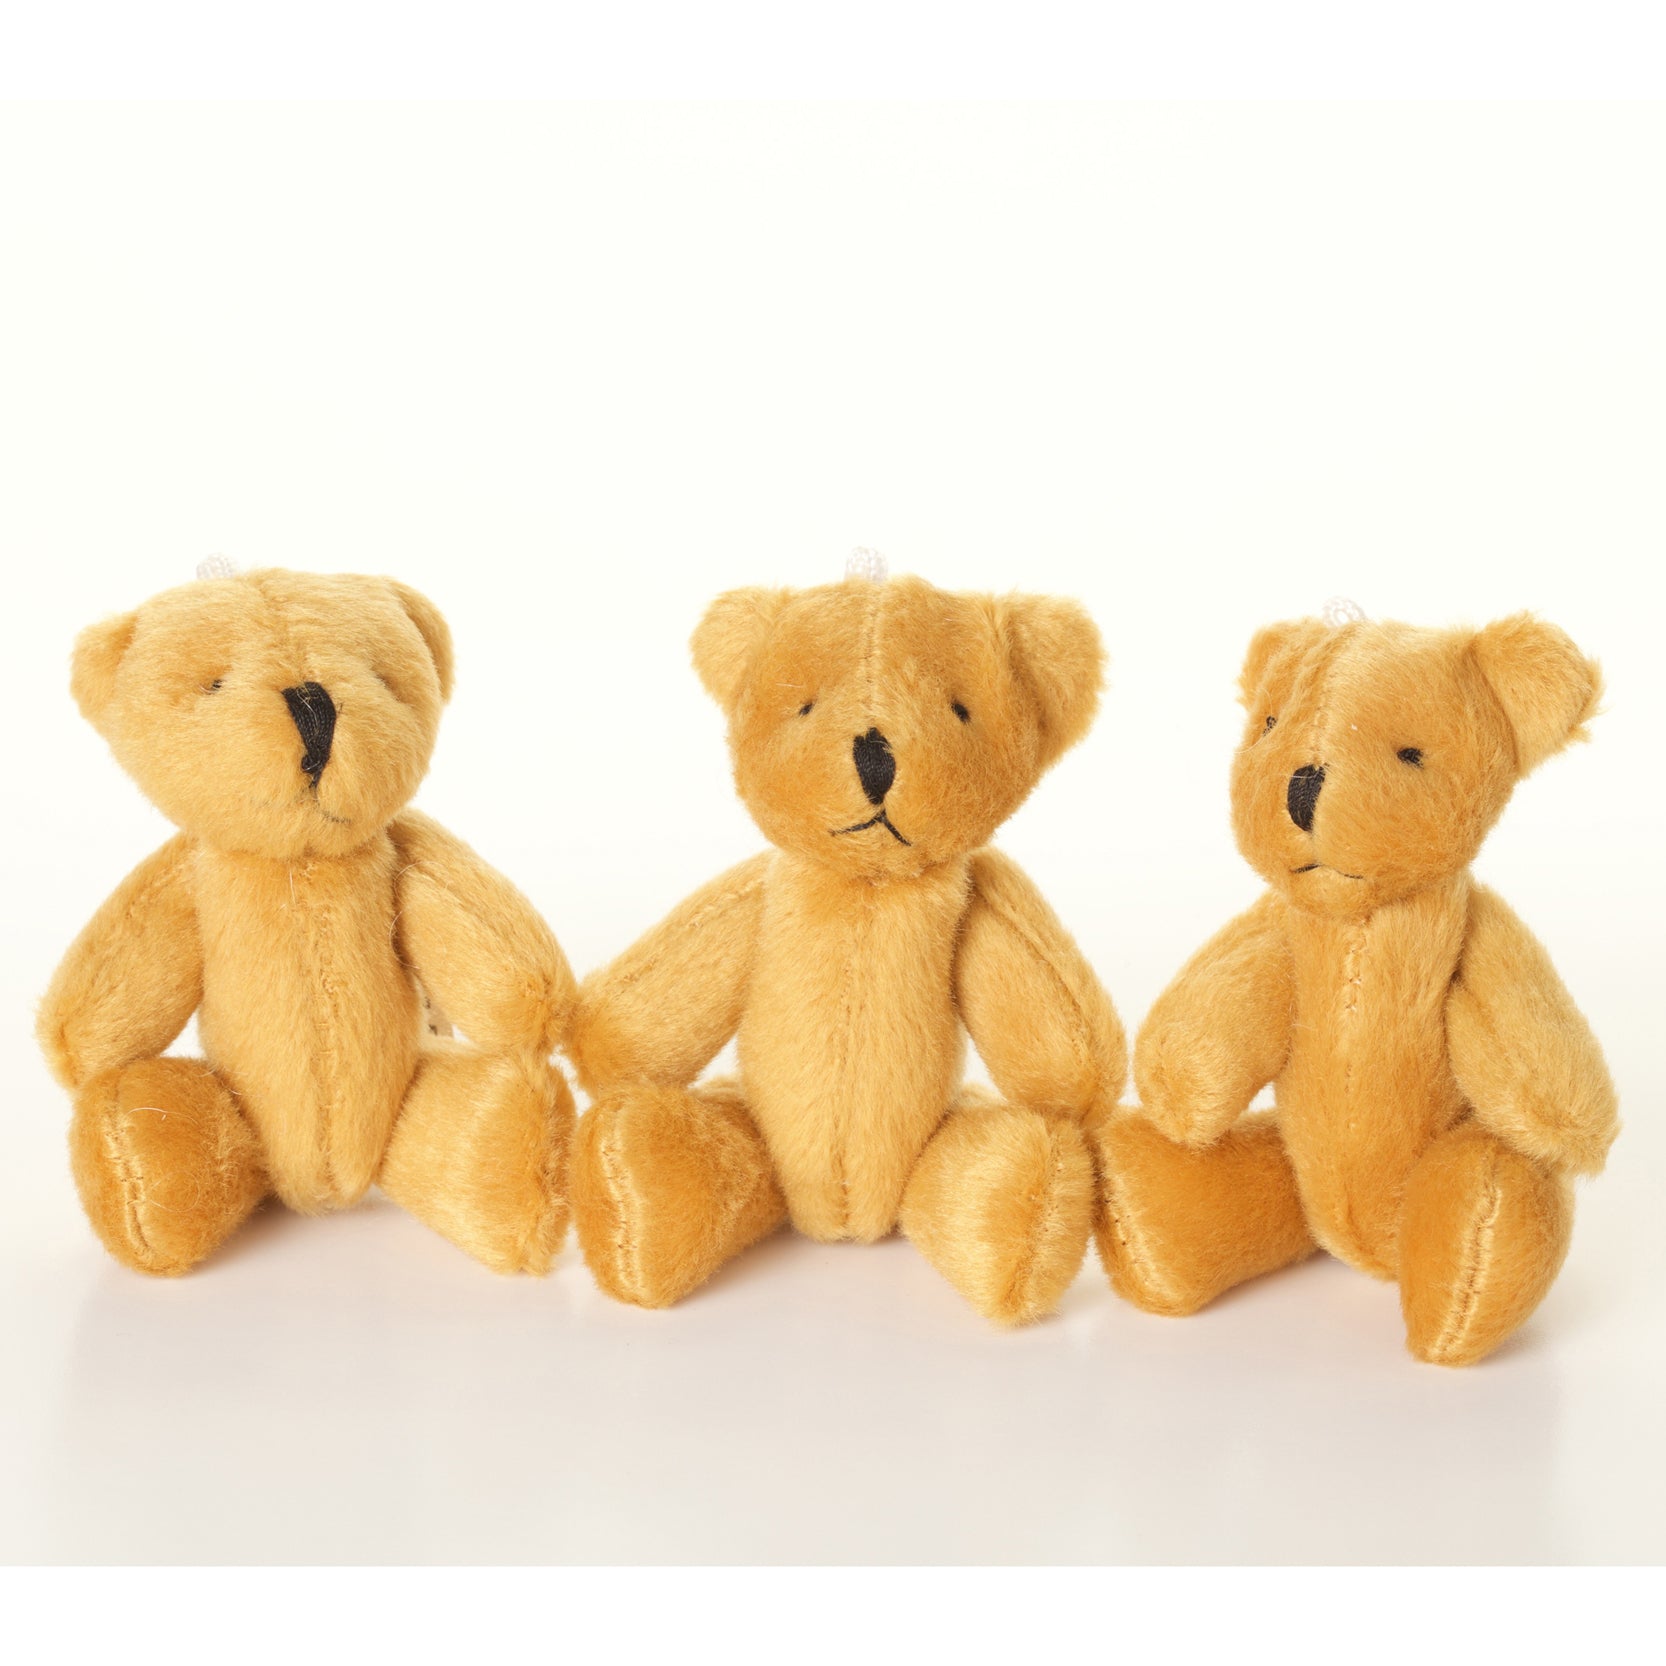 Small BROWN Teddy Bears X 30 - Cute Soft Adorable